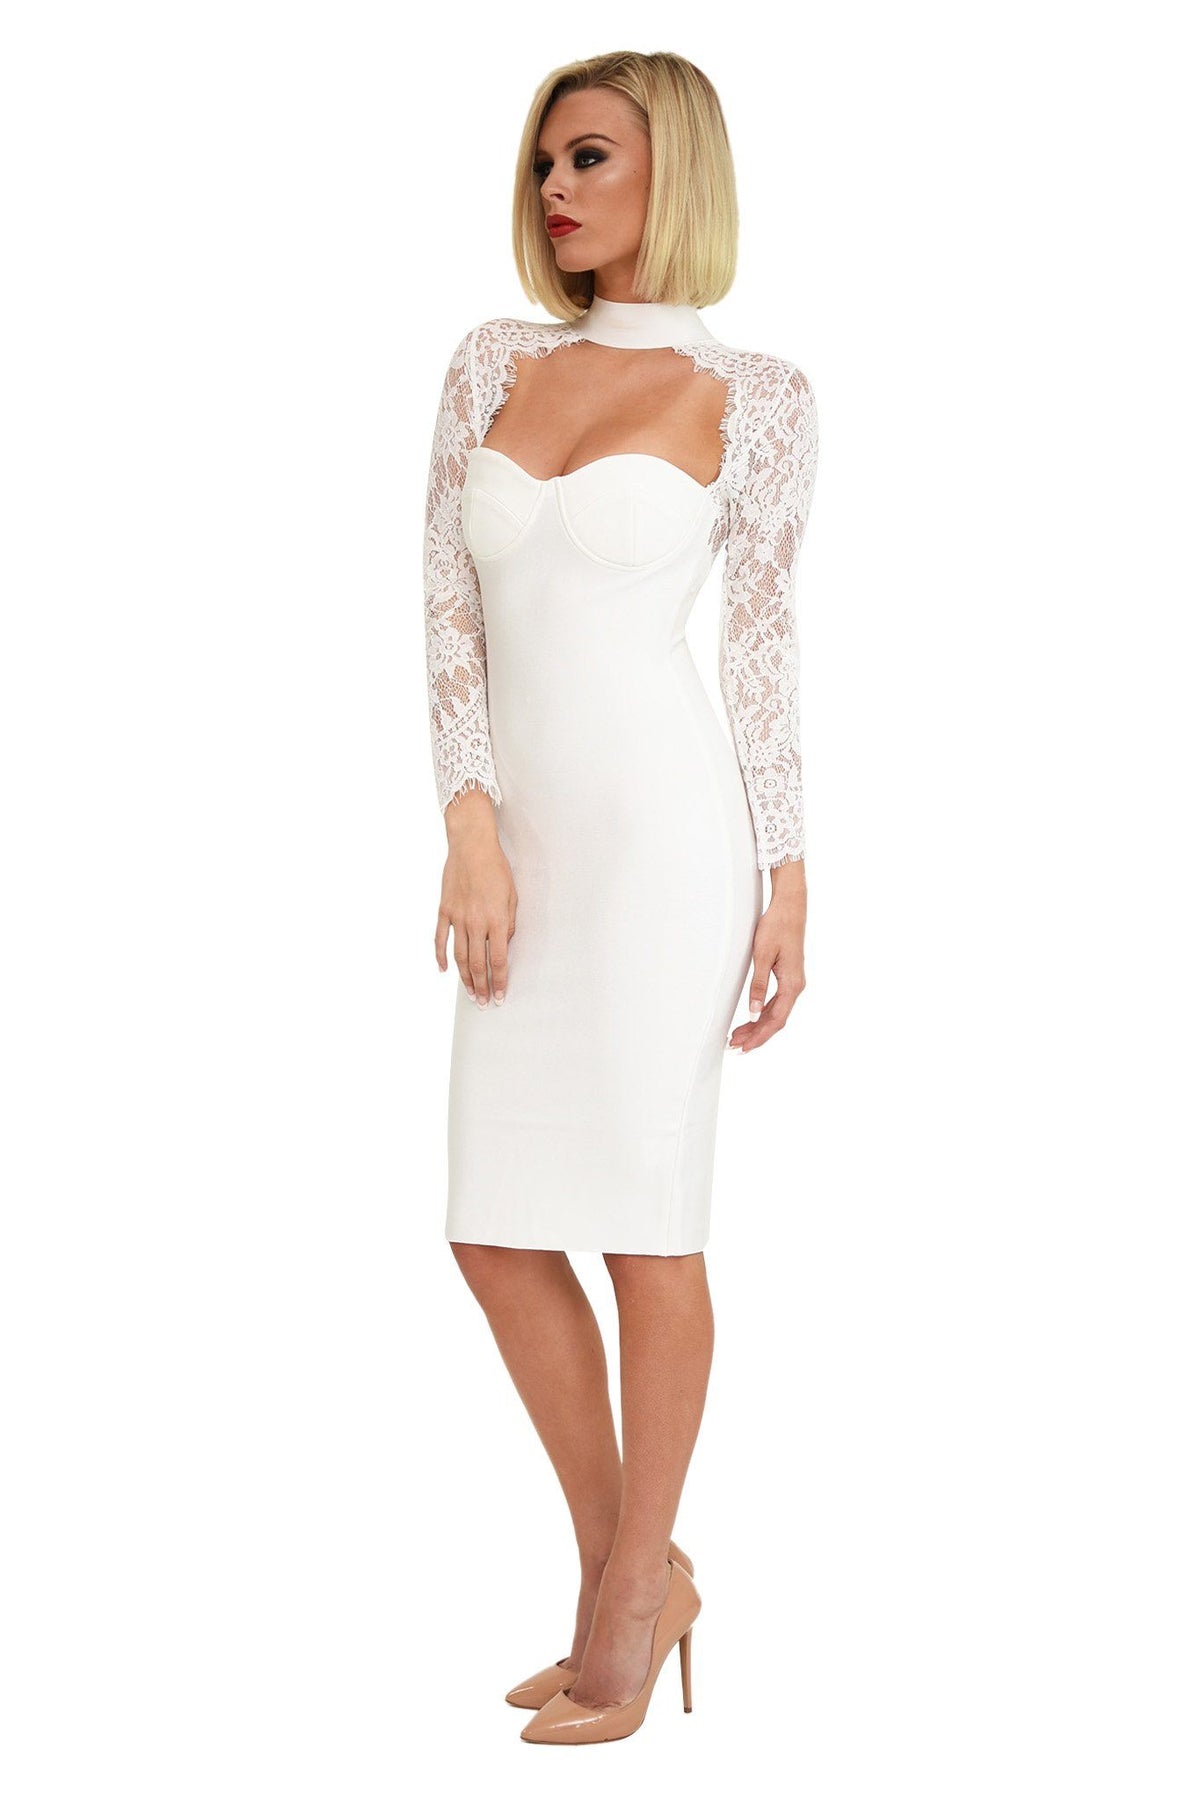 Side image of white lace long-sleeve midi-length bandage dress with sweetheart choker neckline, scalloped eyelash lace details, sheer lace sleeves and back